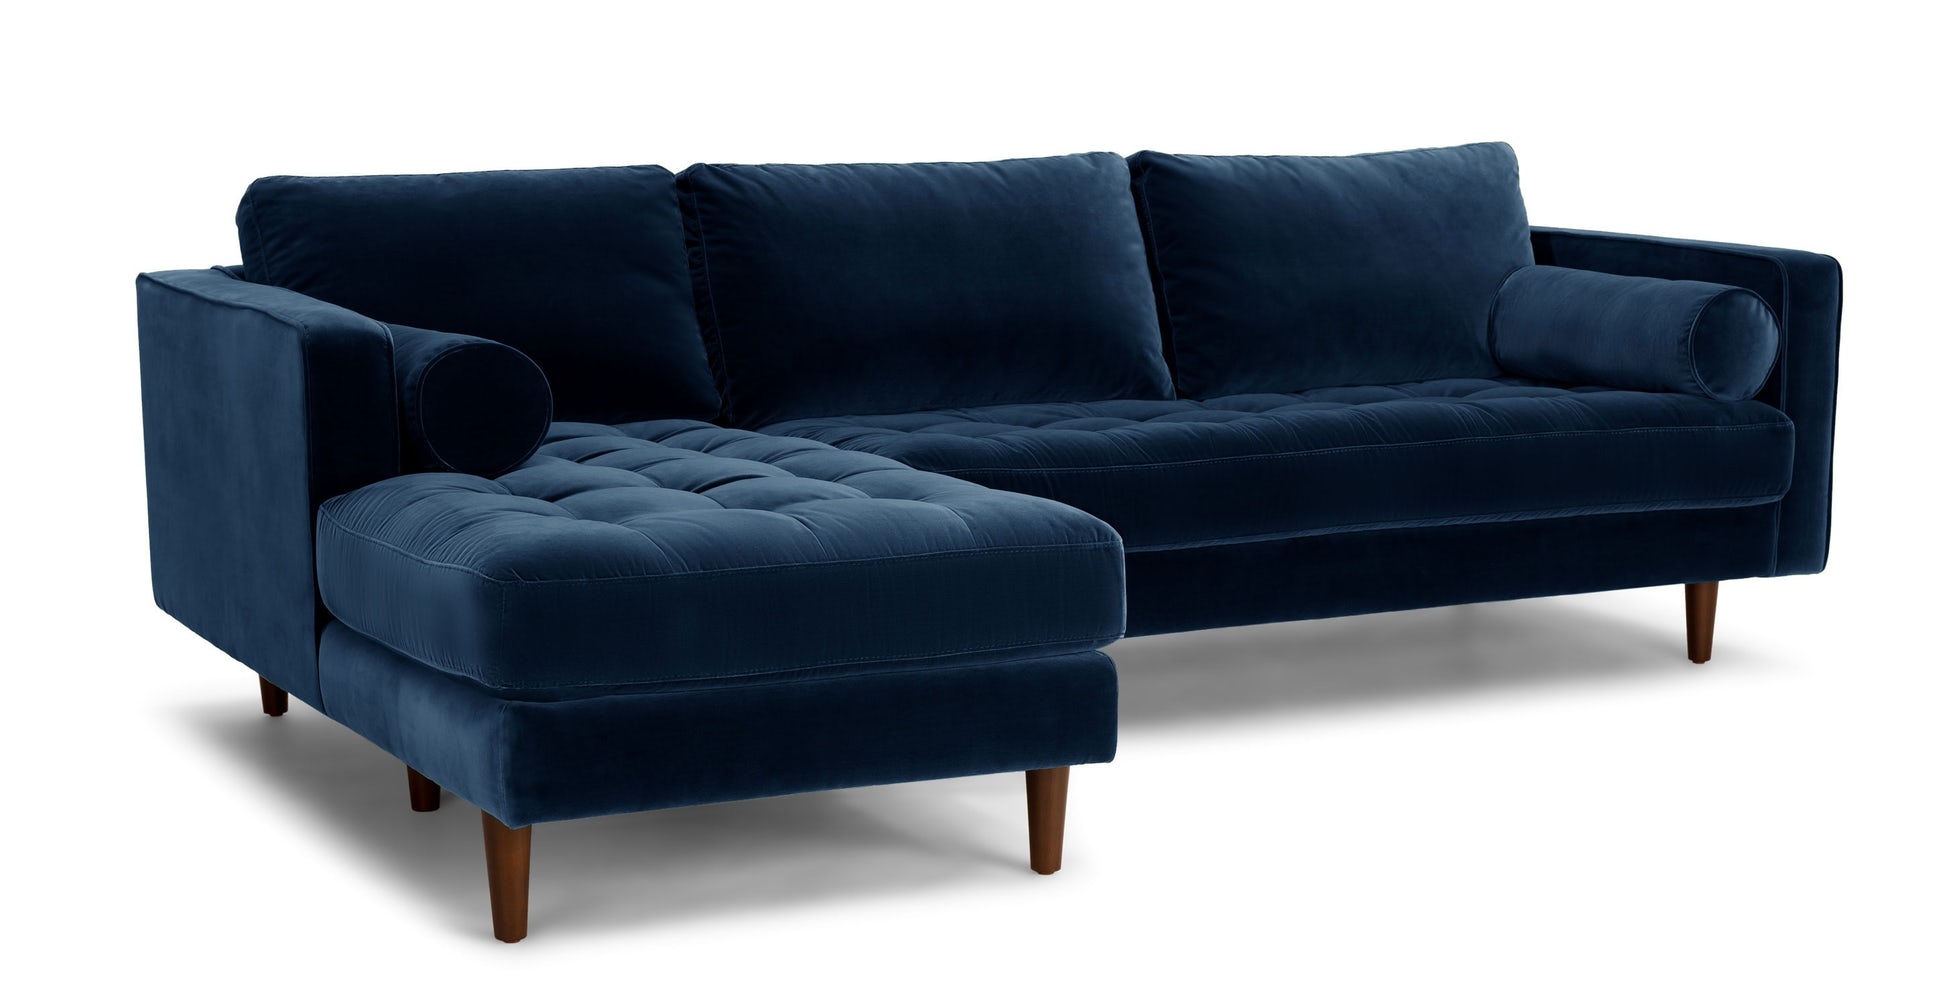 Sven Cascadia Blue Left Sectional Sofa - Image 4